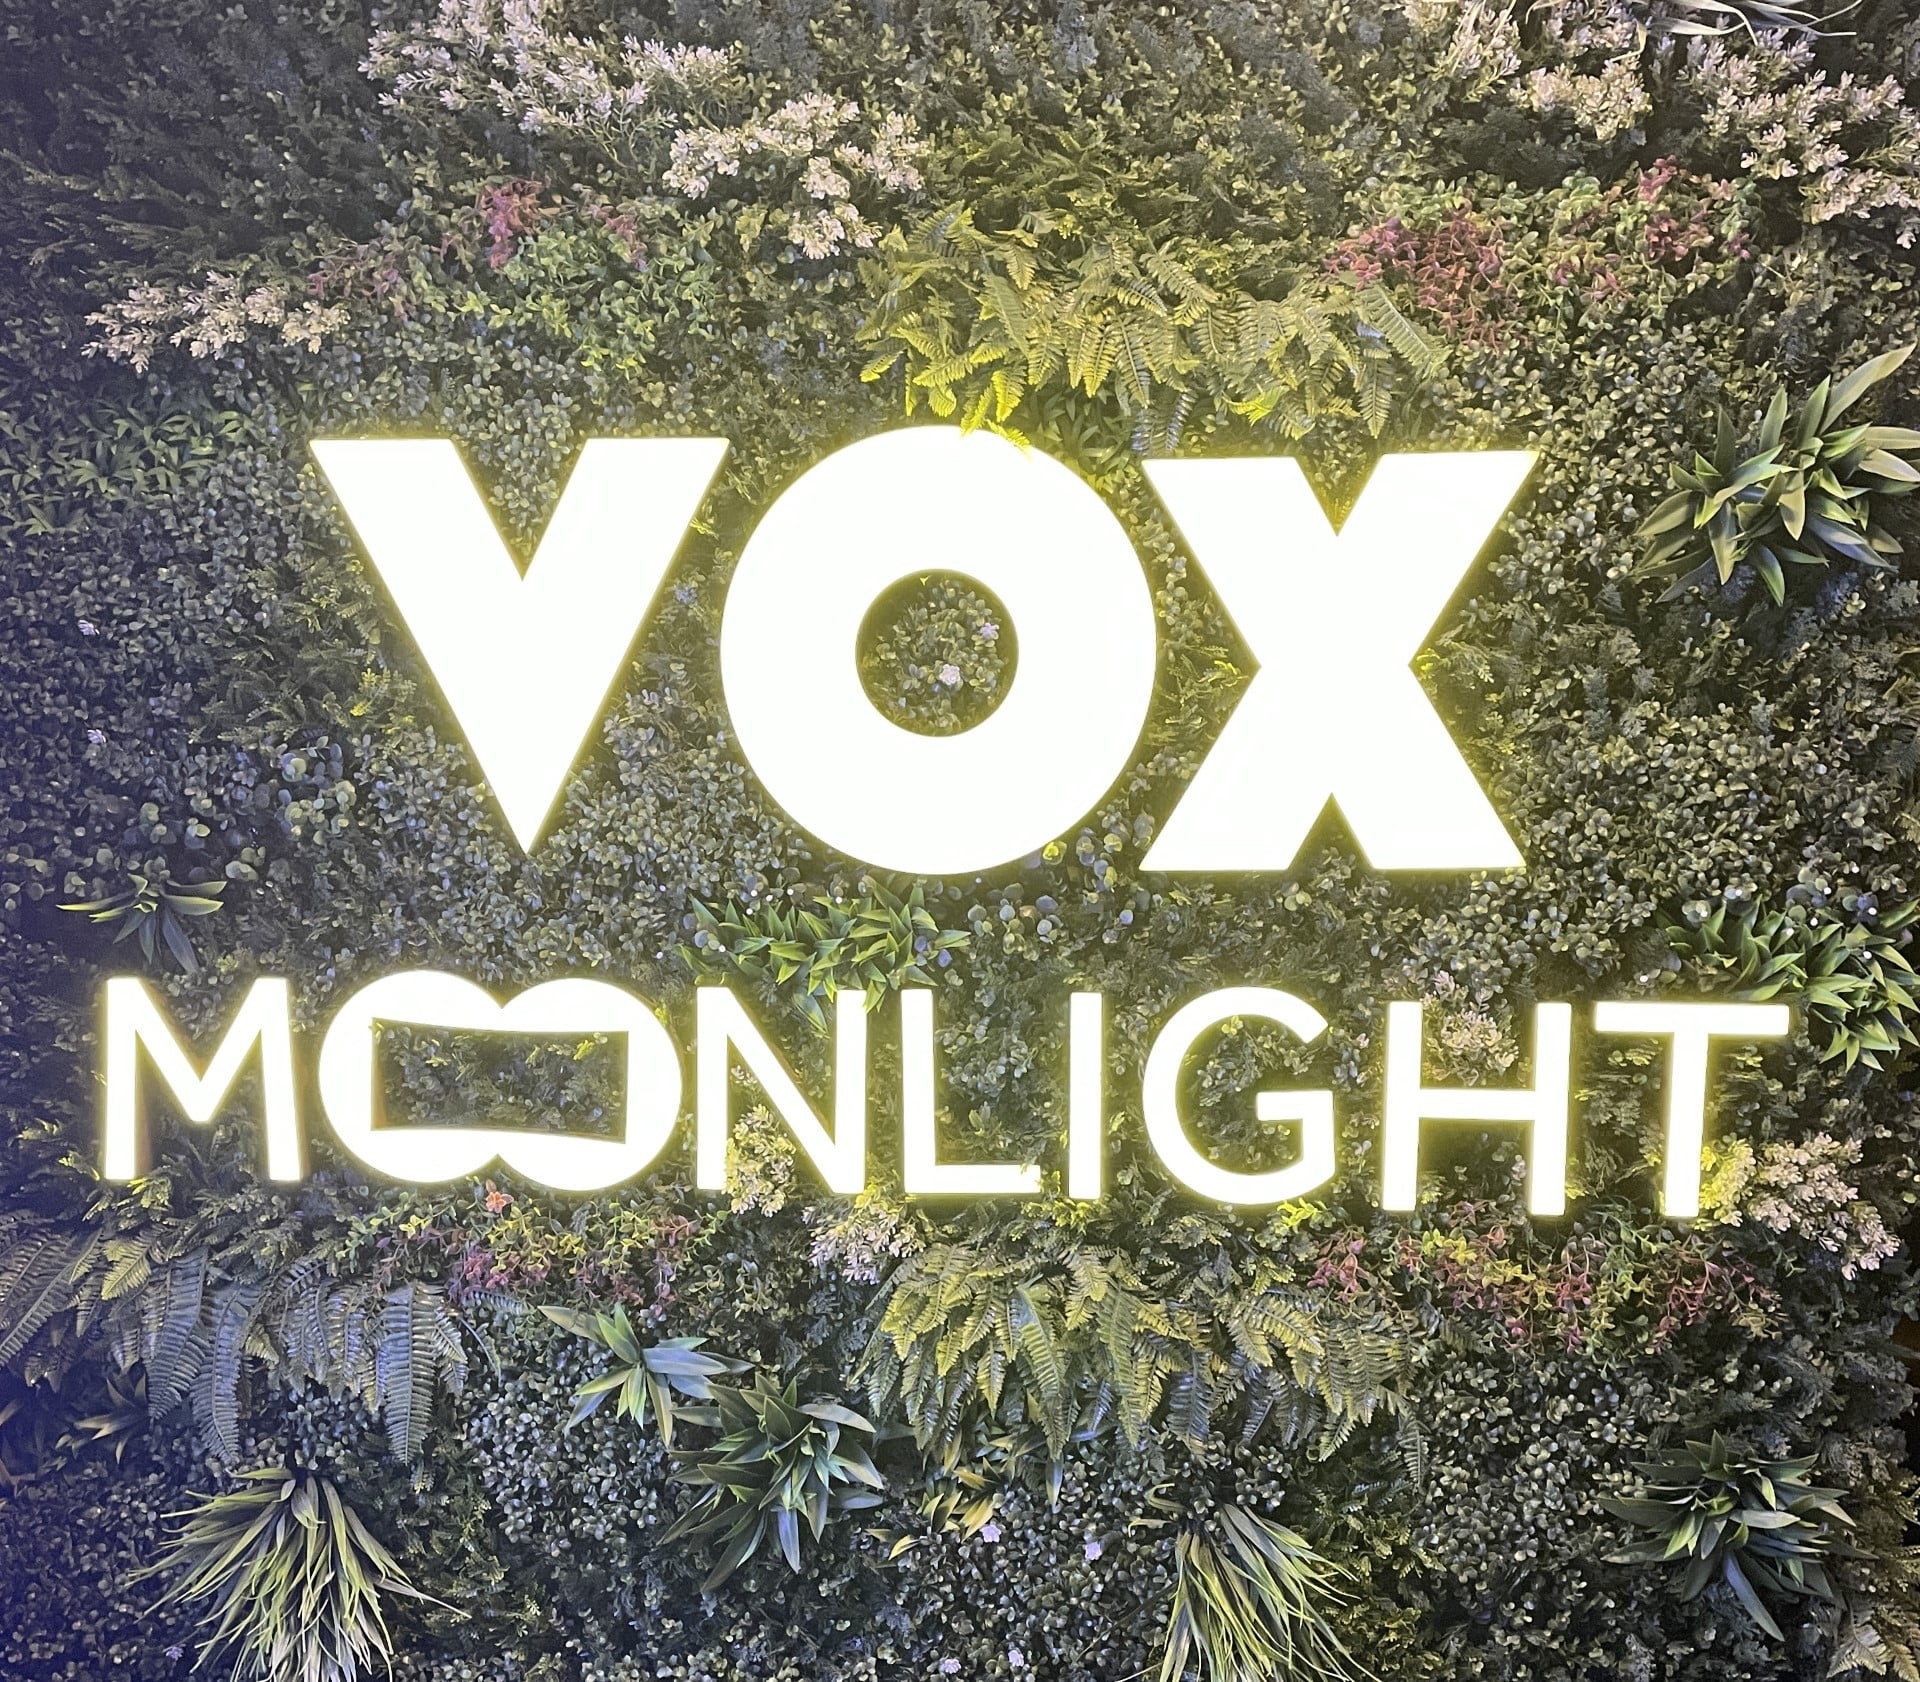 Vox moonlight outdoor cinema dubai